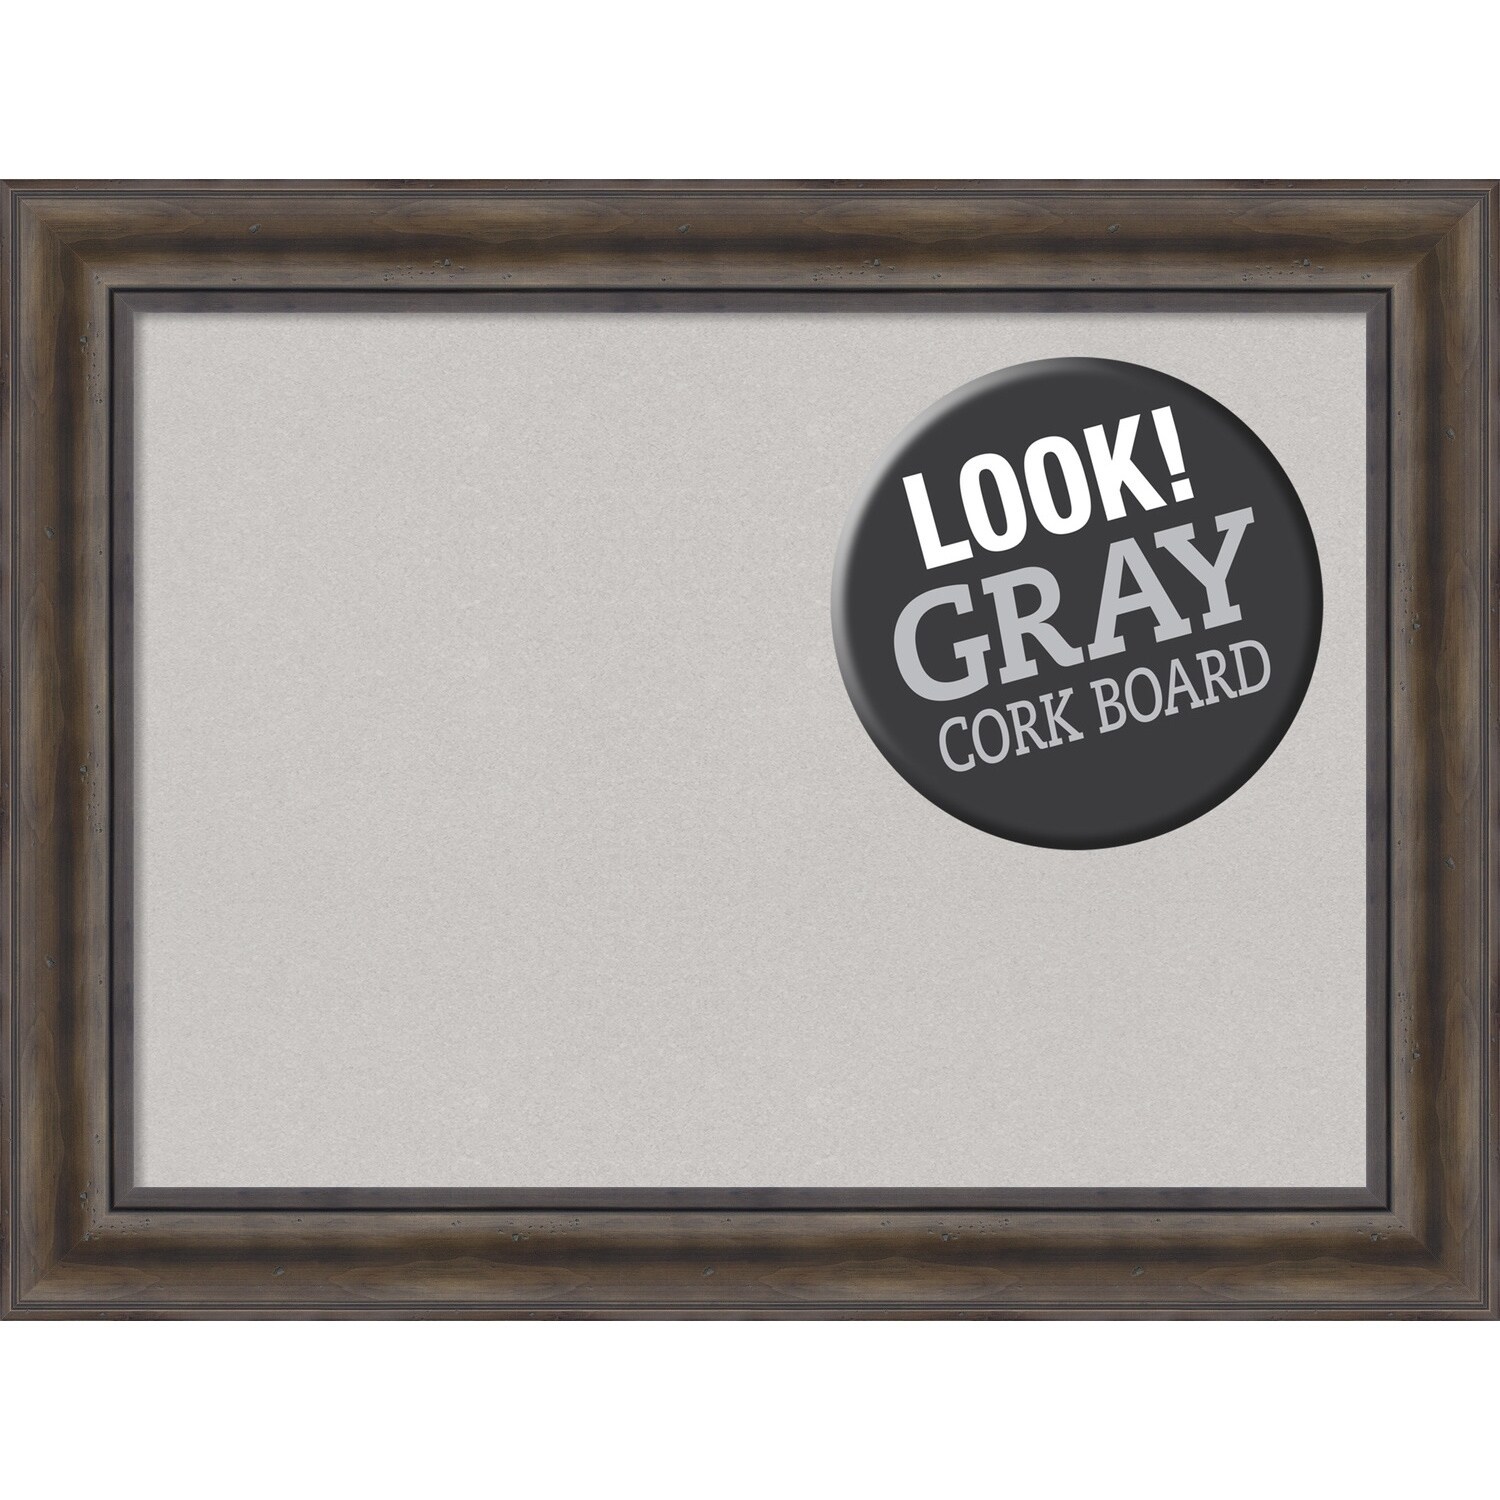 Framed Grey Cork Board, Rustic Pine Brown large - 34 x 26 ...